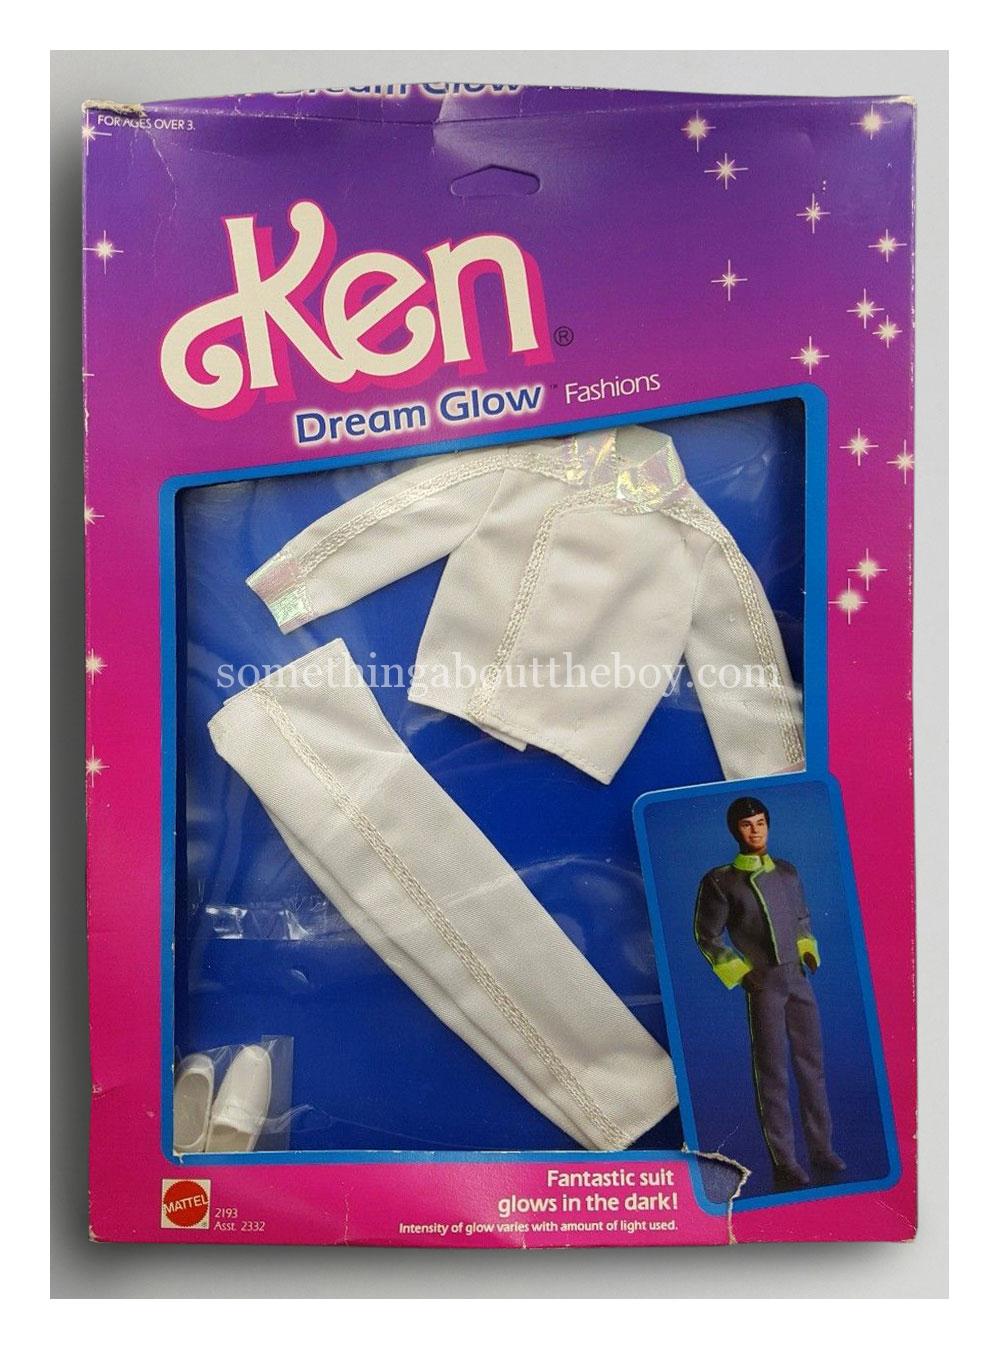 1986 Dream Glow Fashions #2193 in original packaging